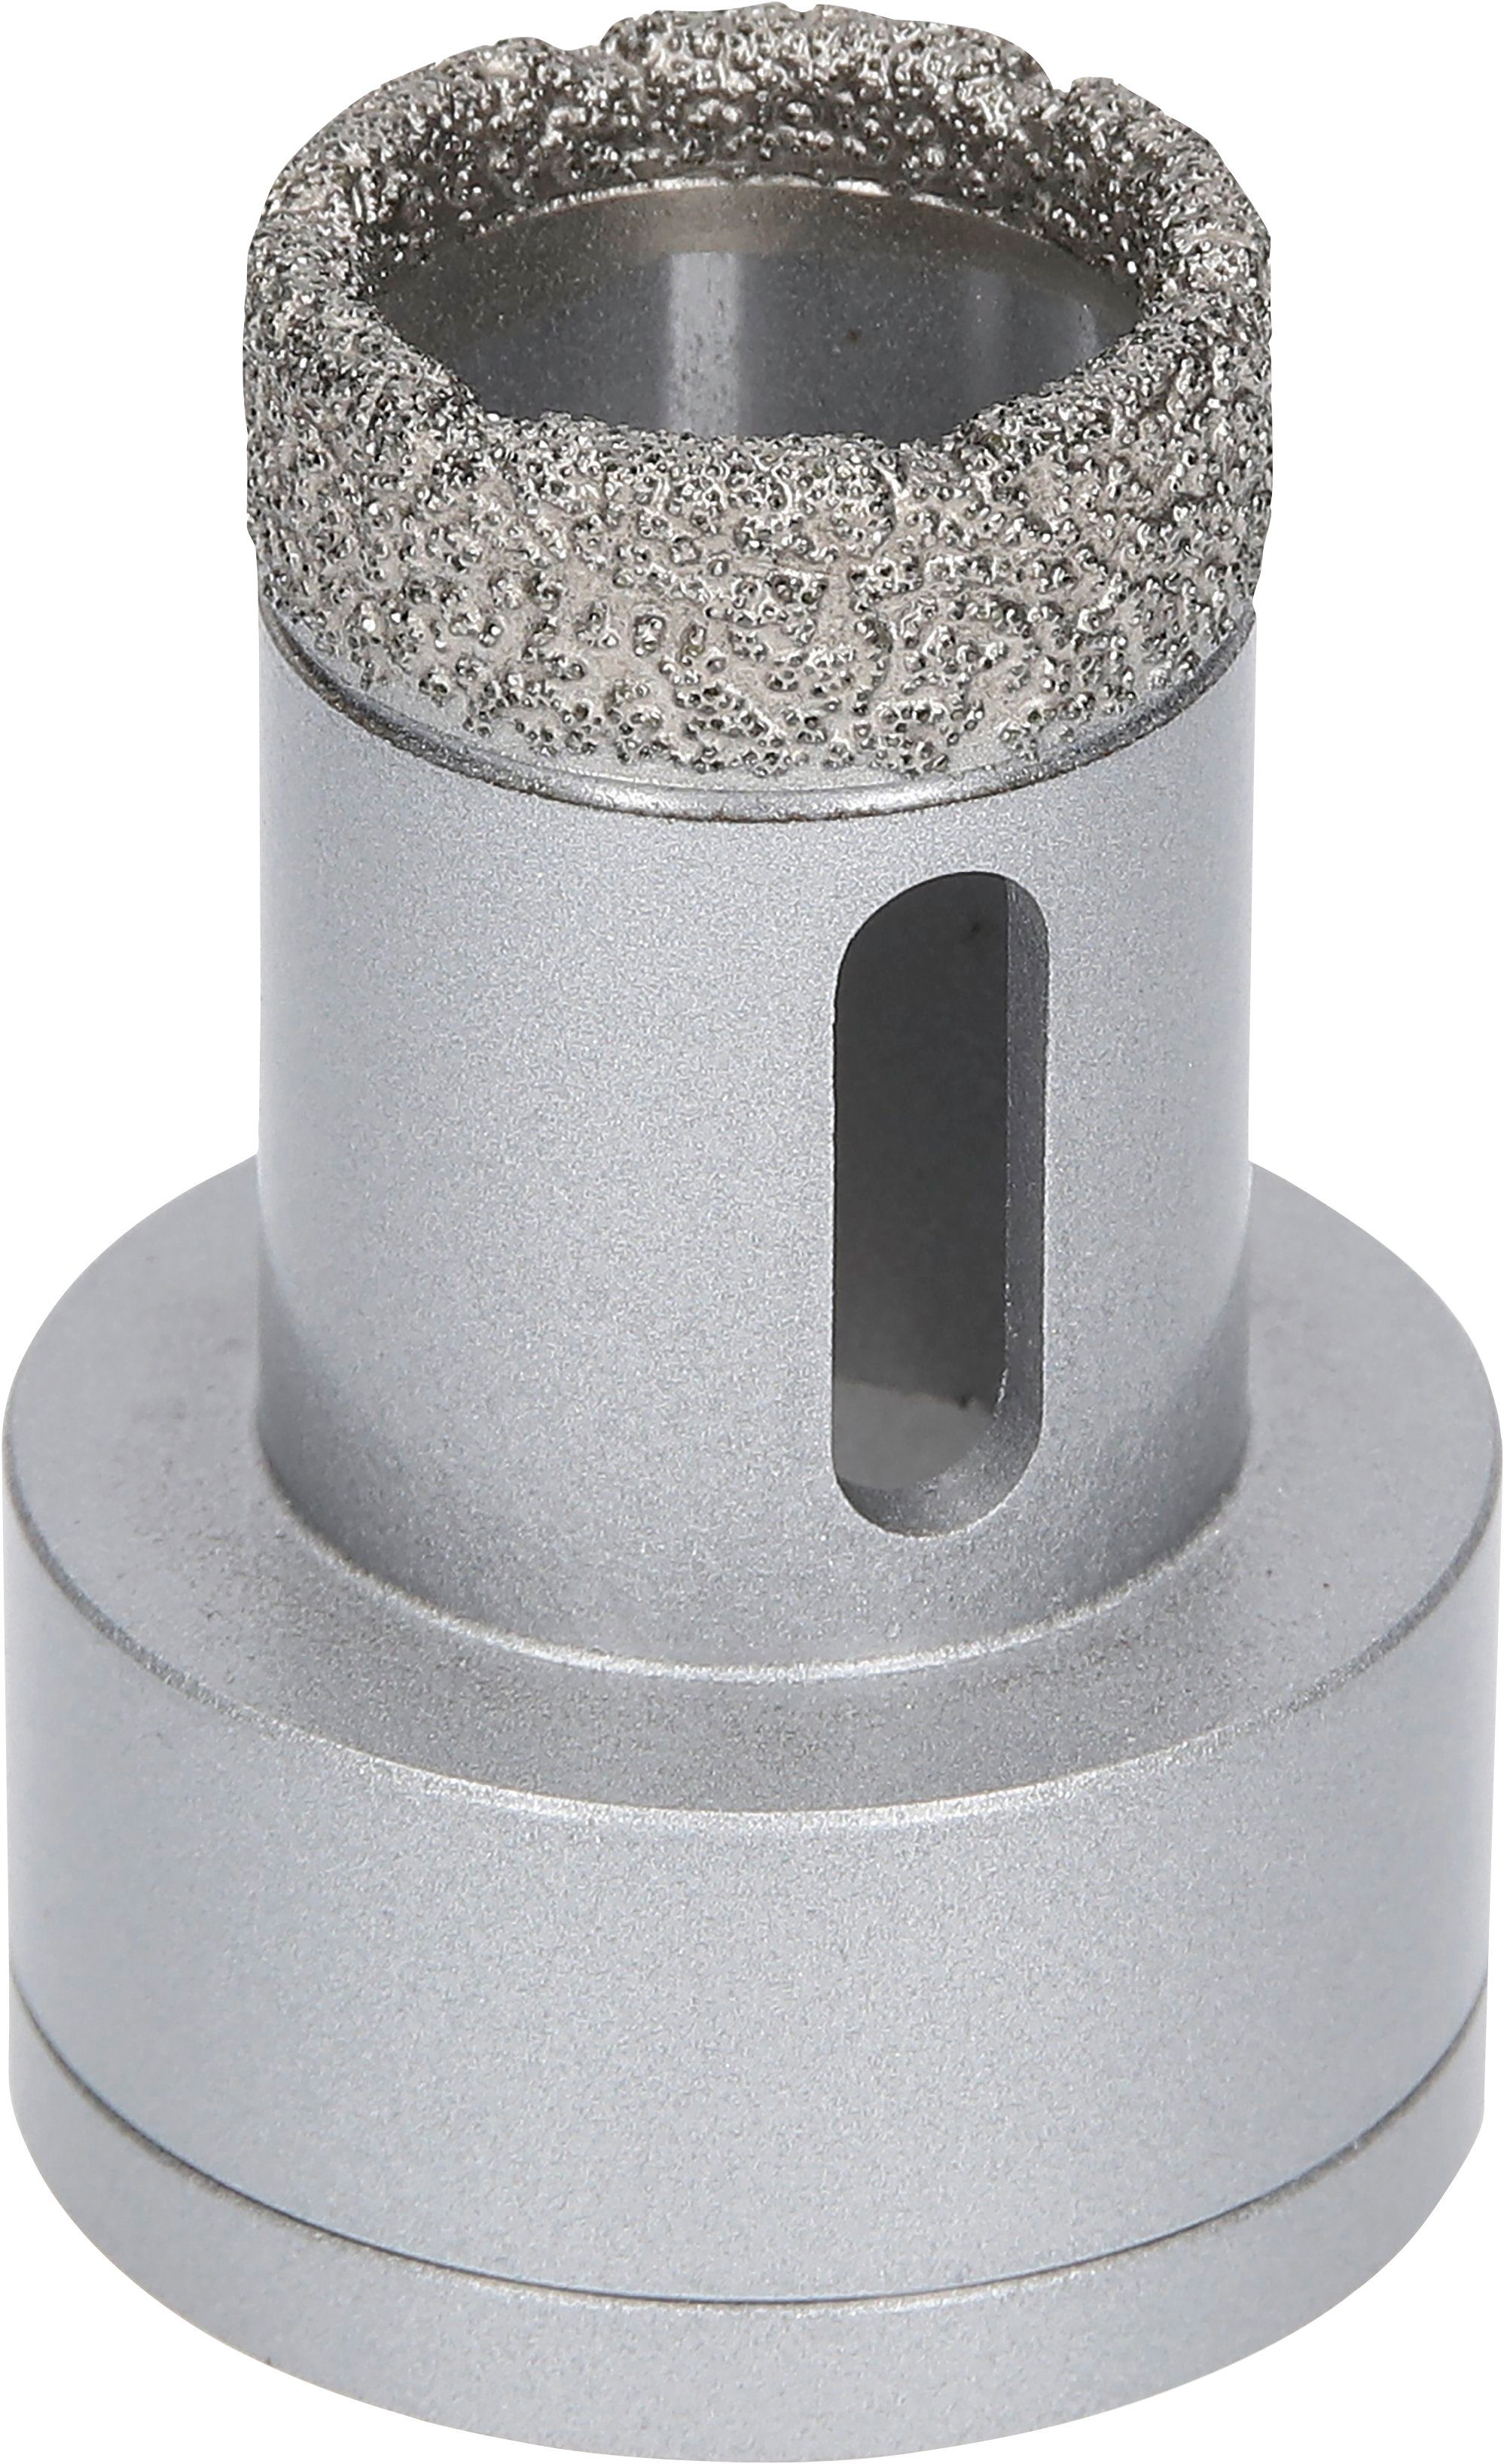 Ceramic Diamanttrockenbohrer Ø 27 Best 27 mm, mm Bosch Dry 35 Speed, Professional for X-LOCK x